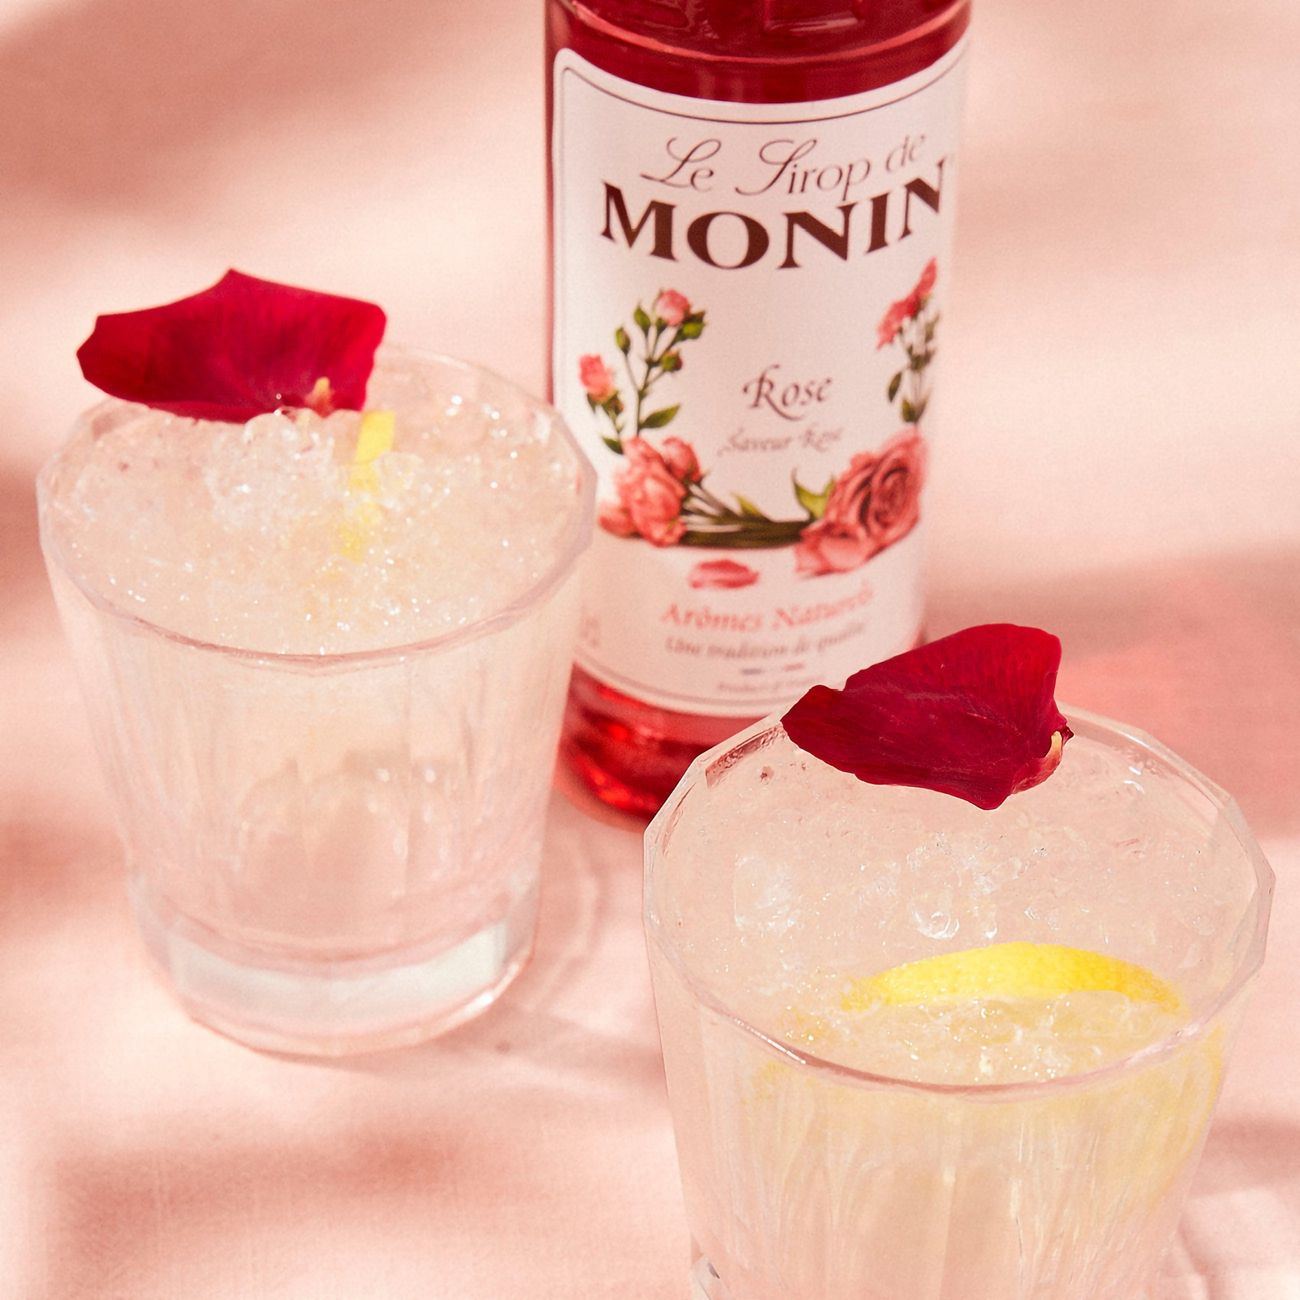 monin-rose-syrup-71340-3